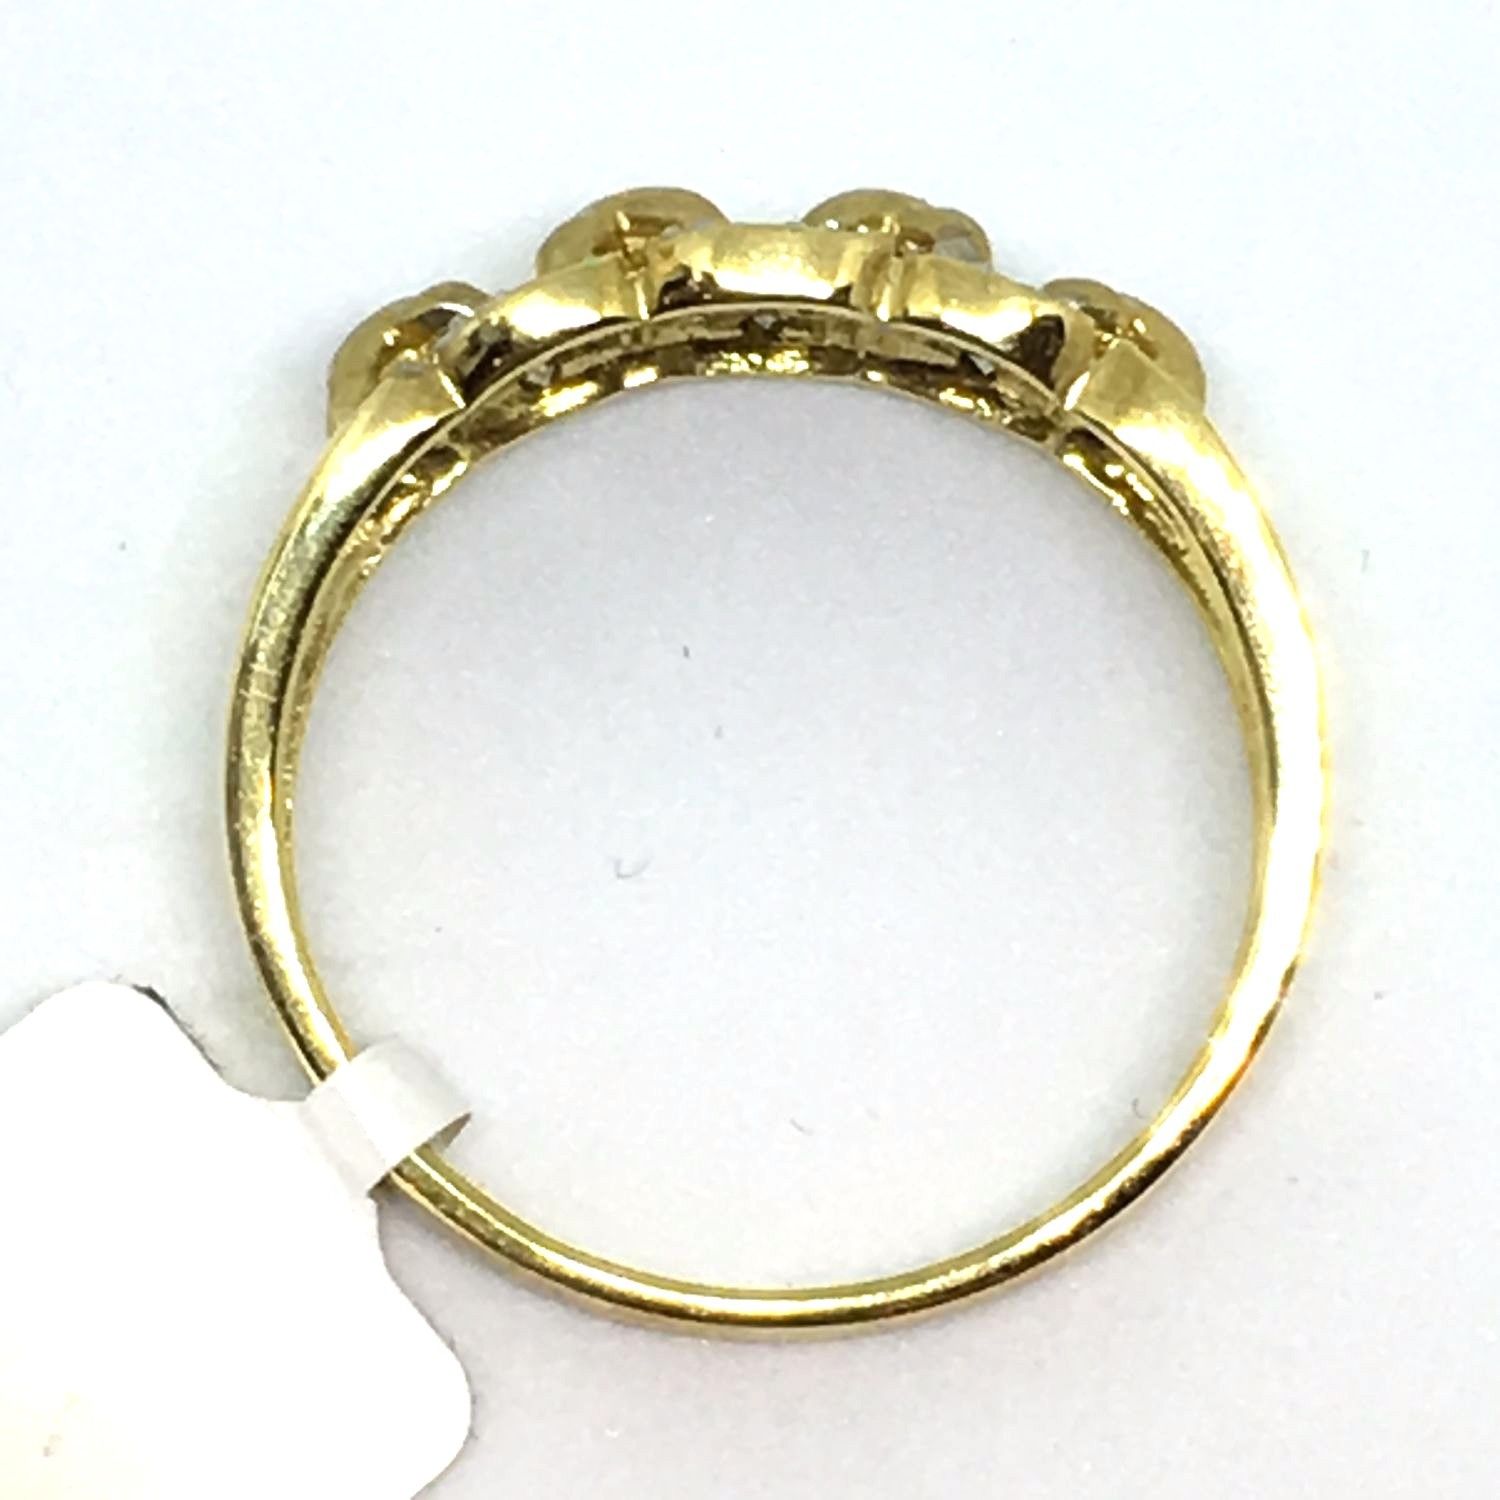 Genuine Diamond 14K Yellow Gold Ring $410 NWT Size 7